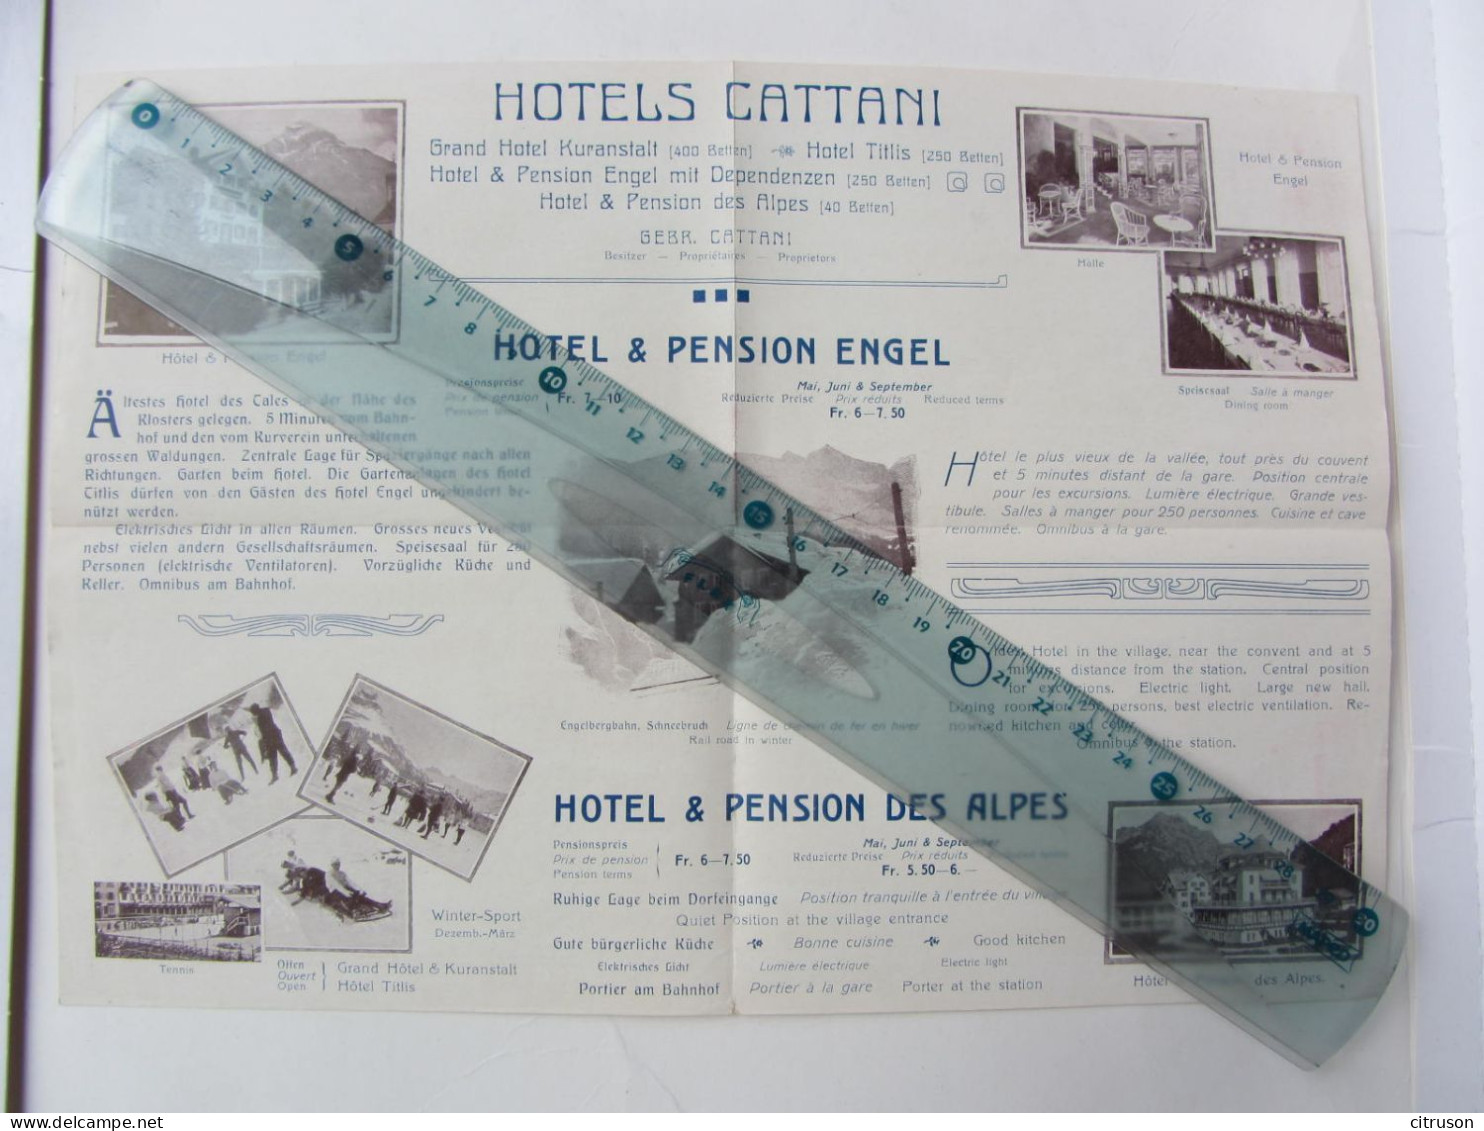 DEPLIANT TOURISTIQUE SUISSE ENGELBERG HOTELS SCHWEIZ - Tourism Brochures